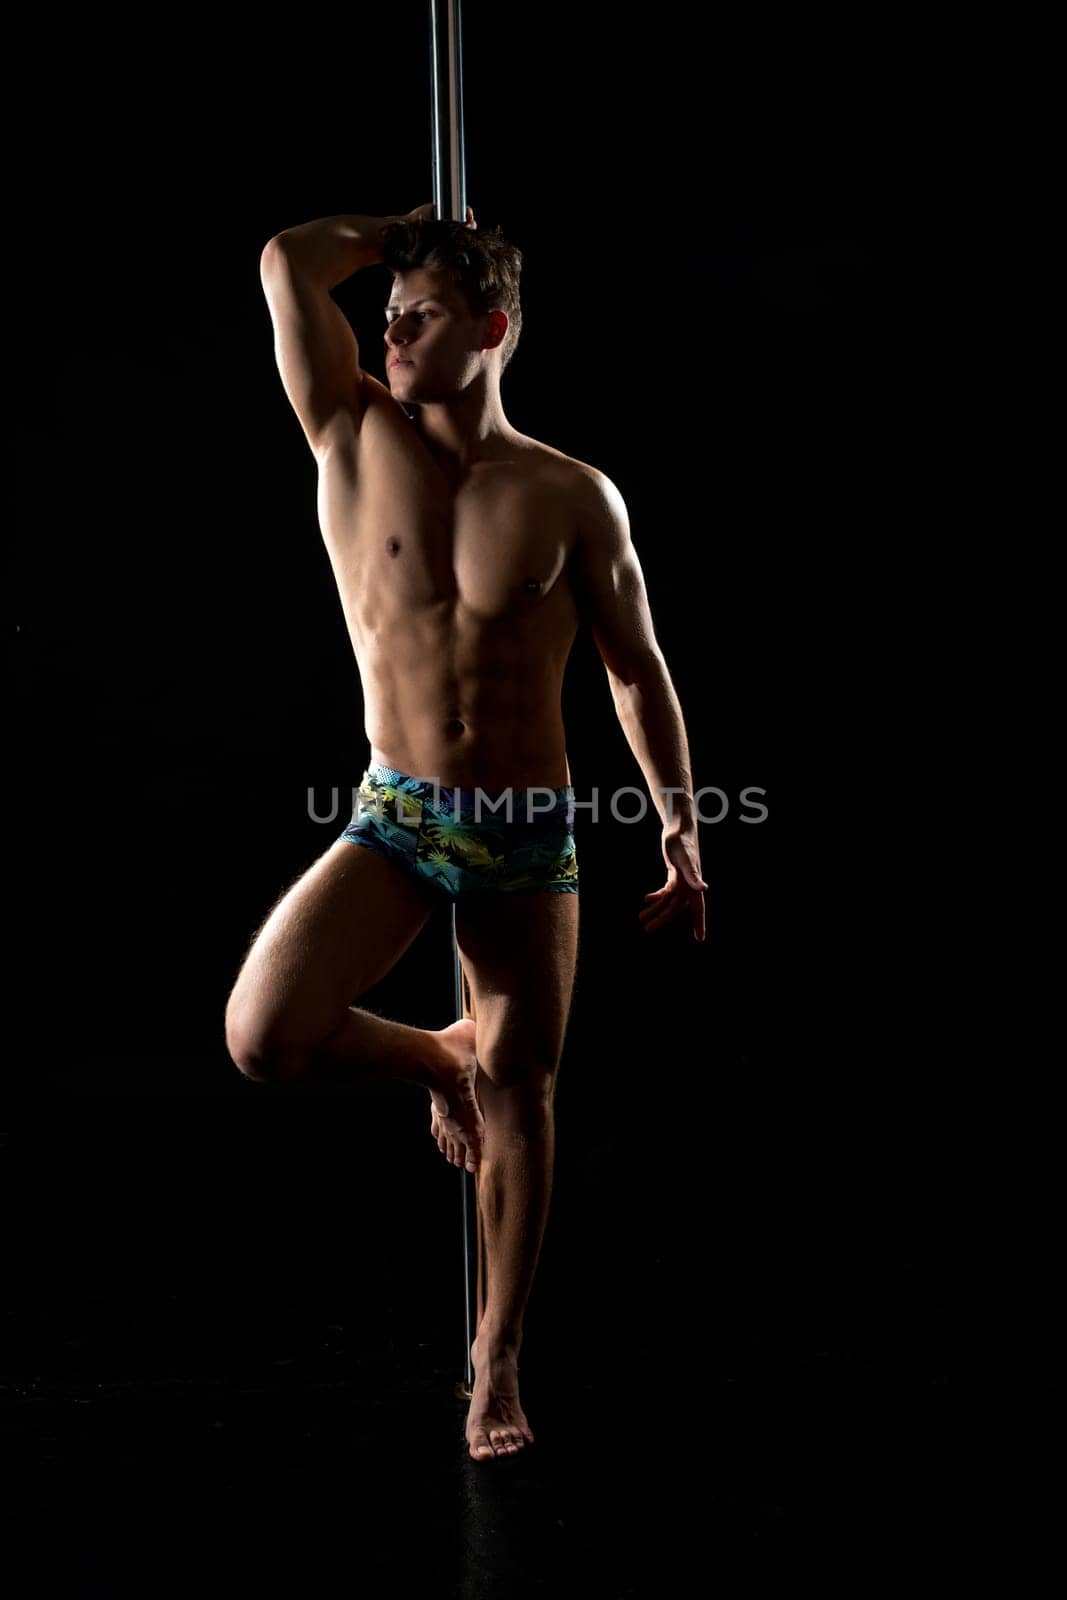 Male pole dance. Photo of muscular man posing at camera